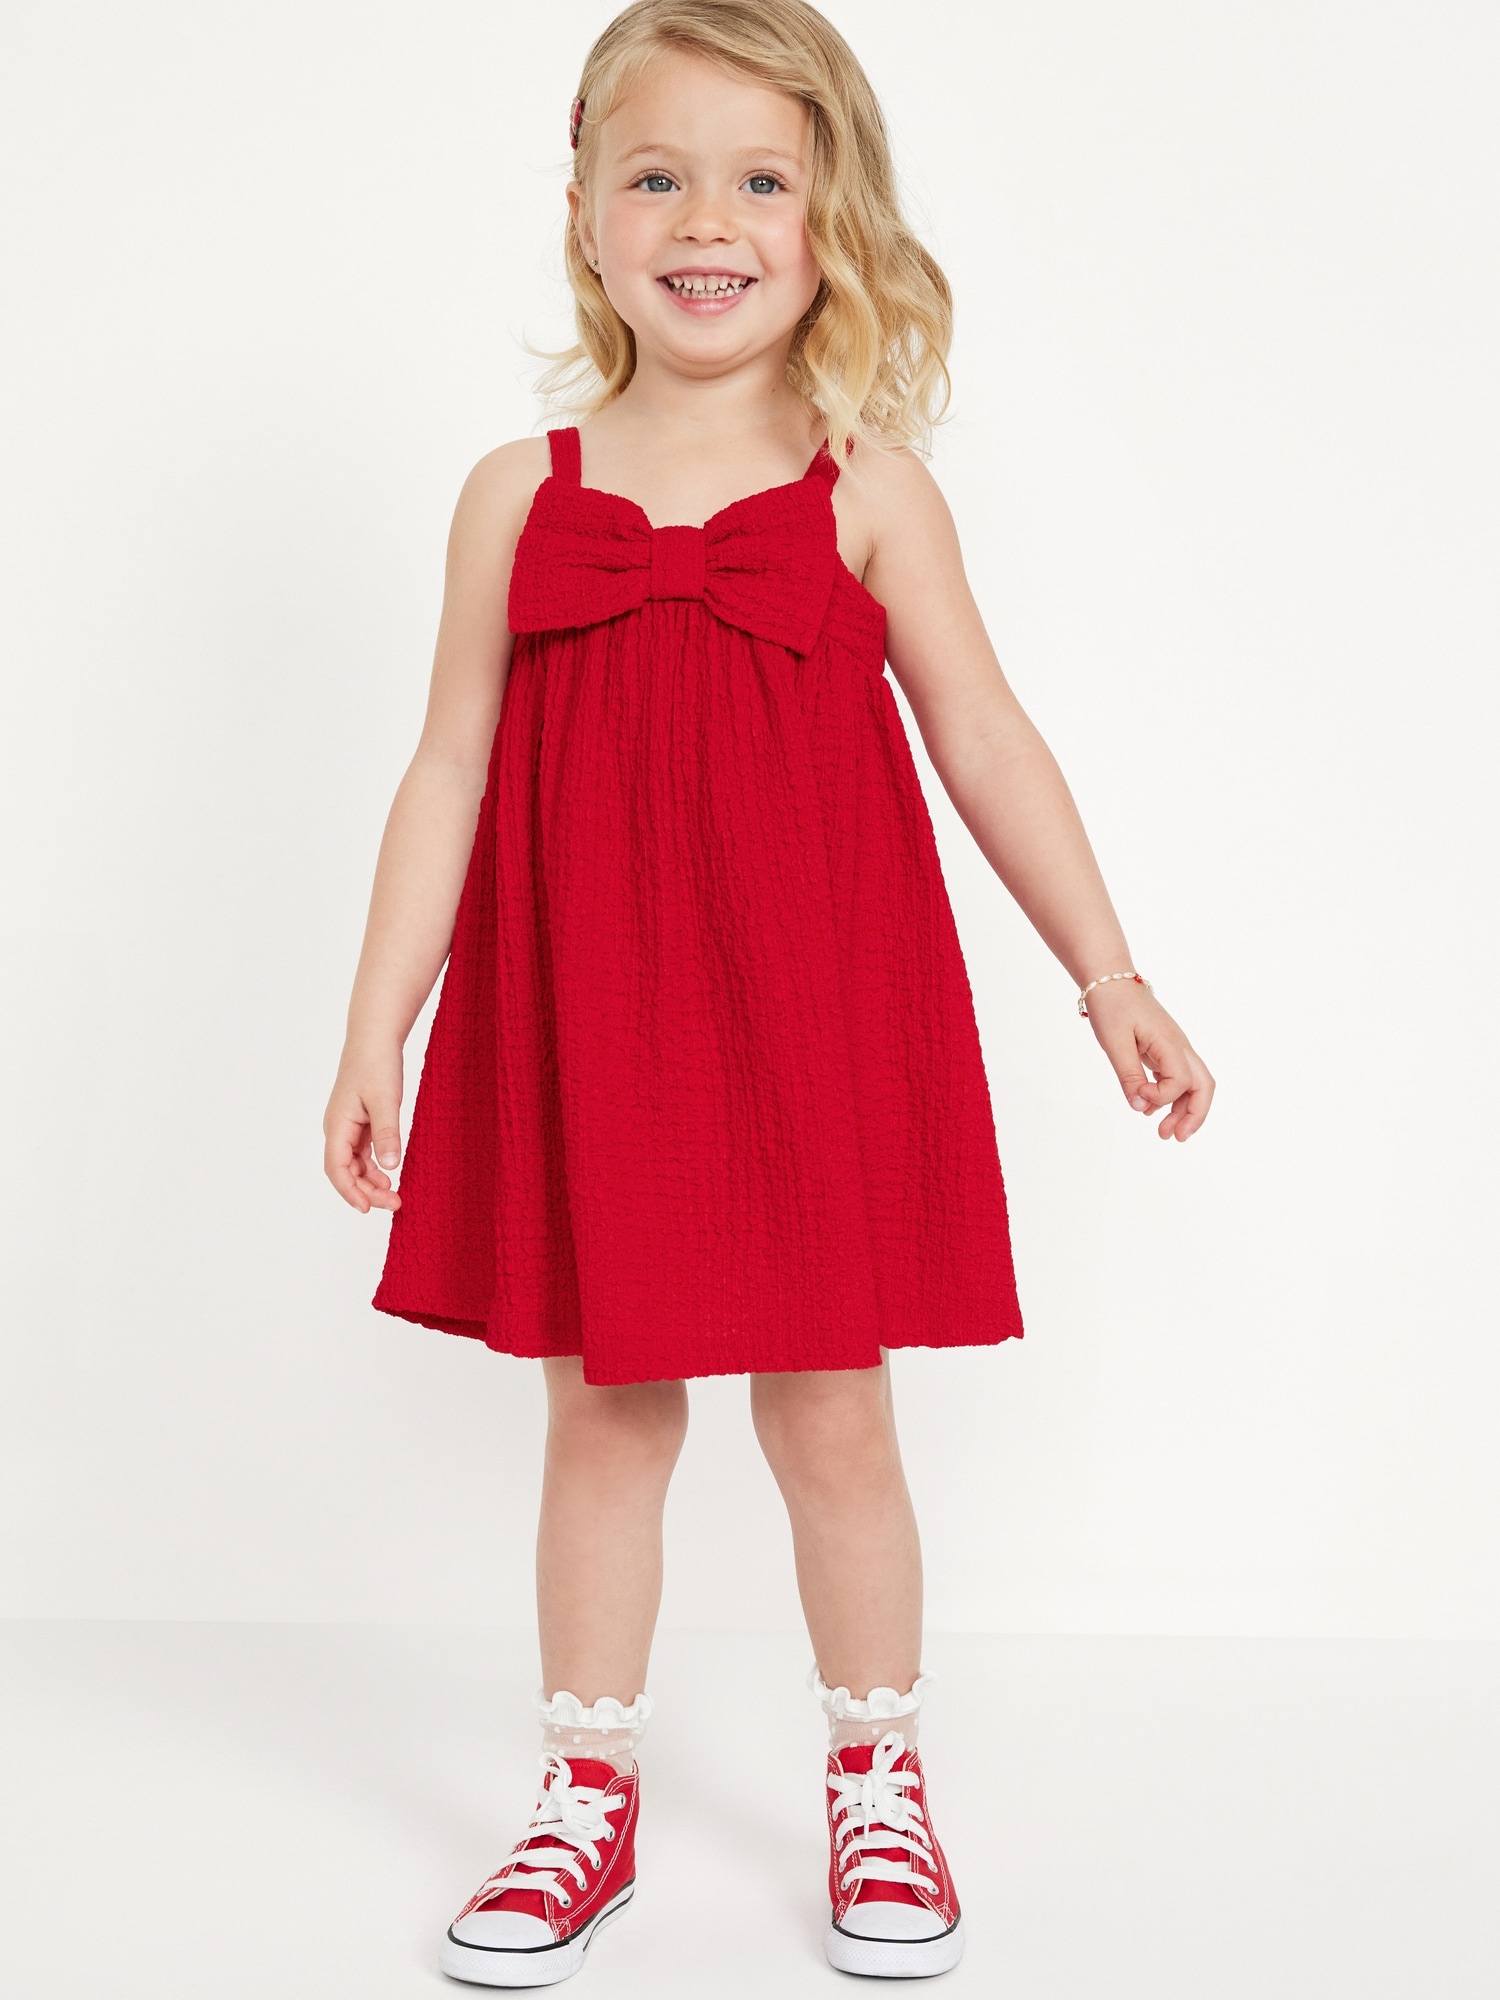 Sleeveless Textured Bow-Tie Dress for Toddler Girls